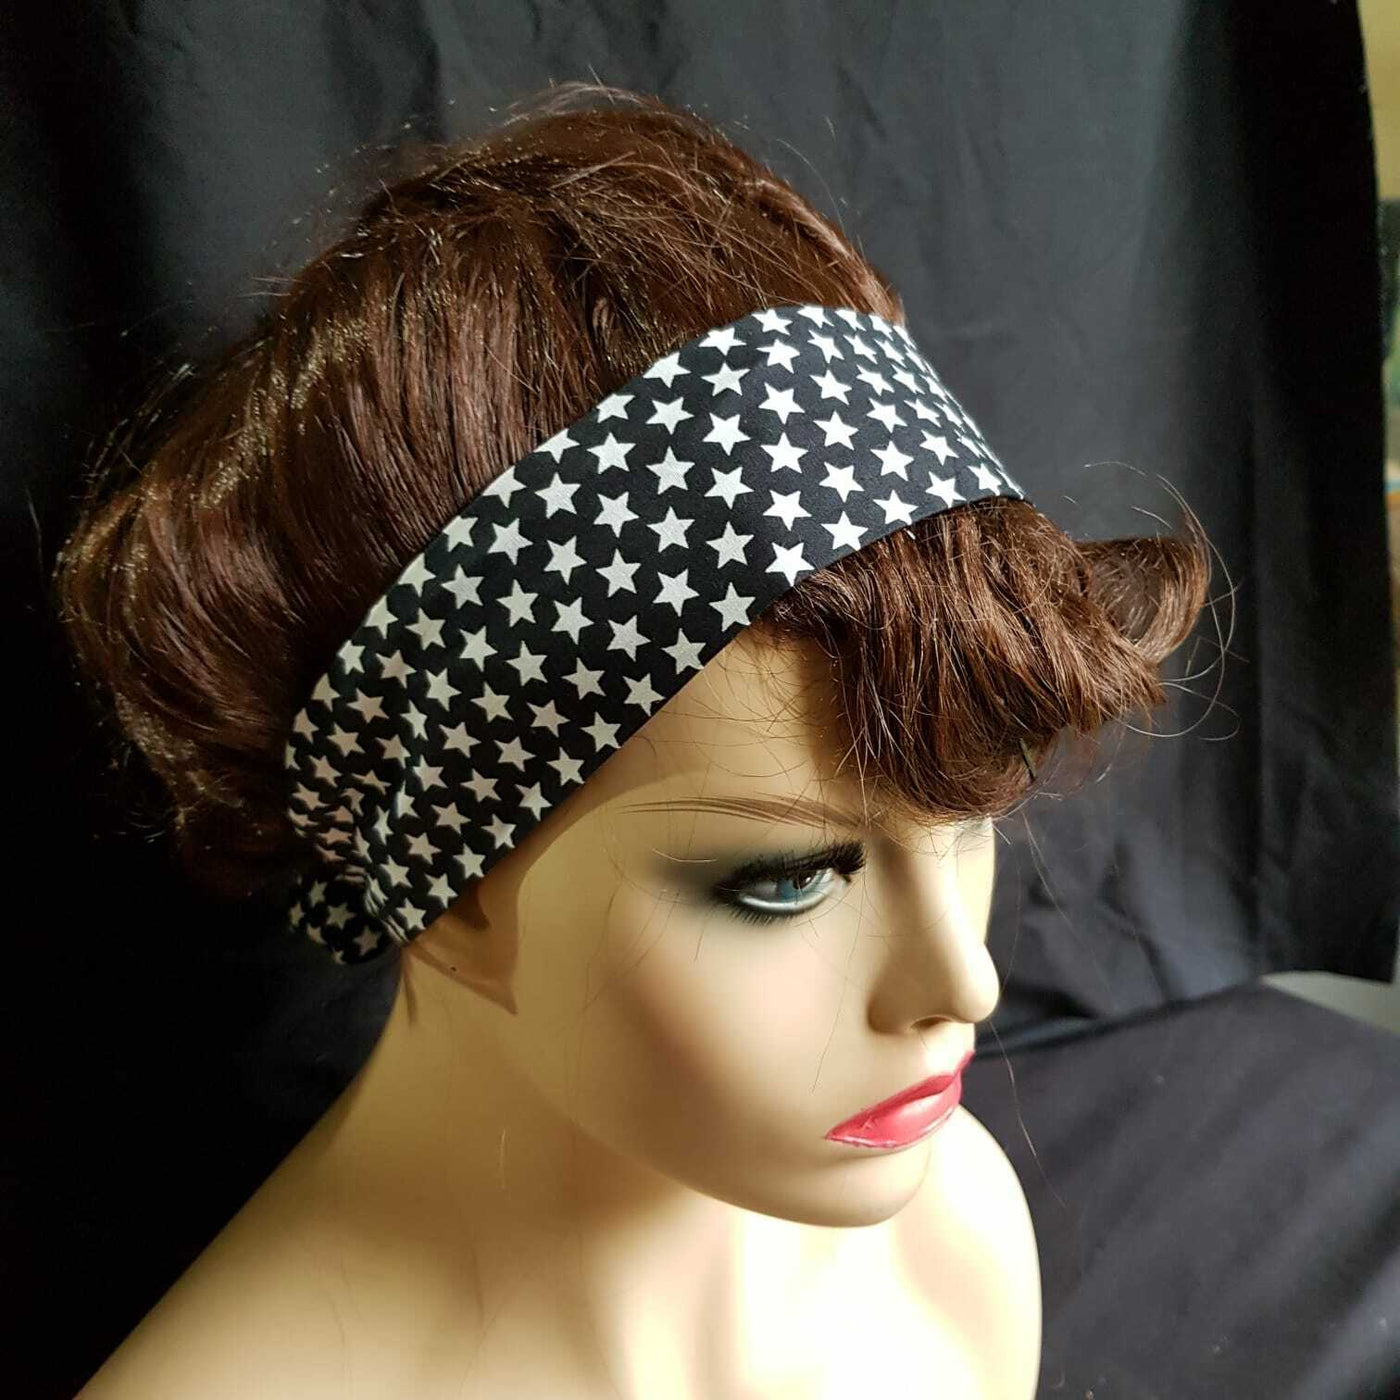 Wired Headband Hair Band Rockabilly Retro Scarf Vintage Handmade Cotton Bendy